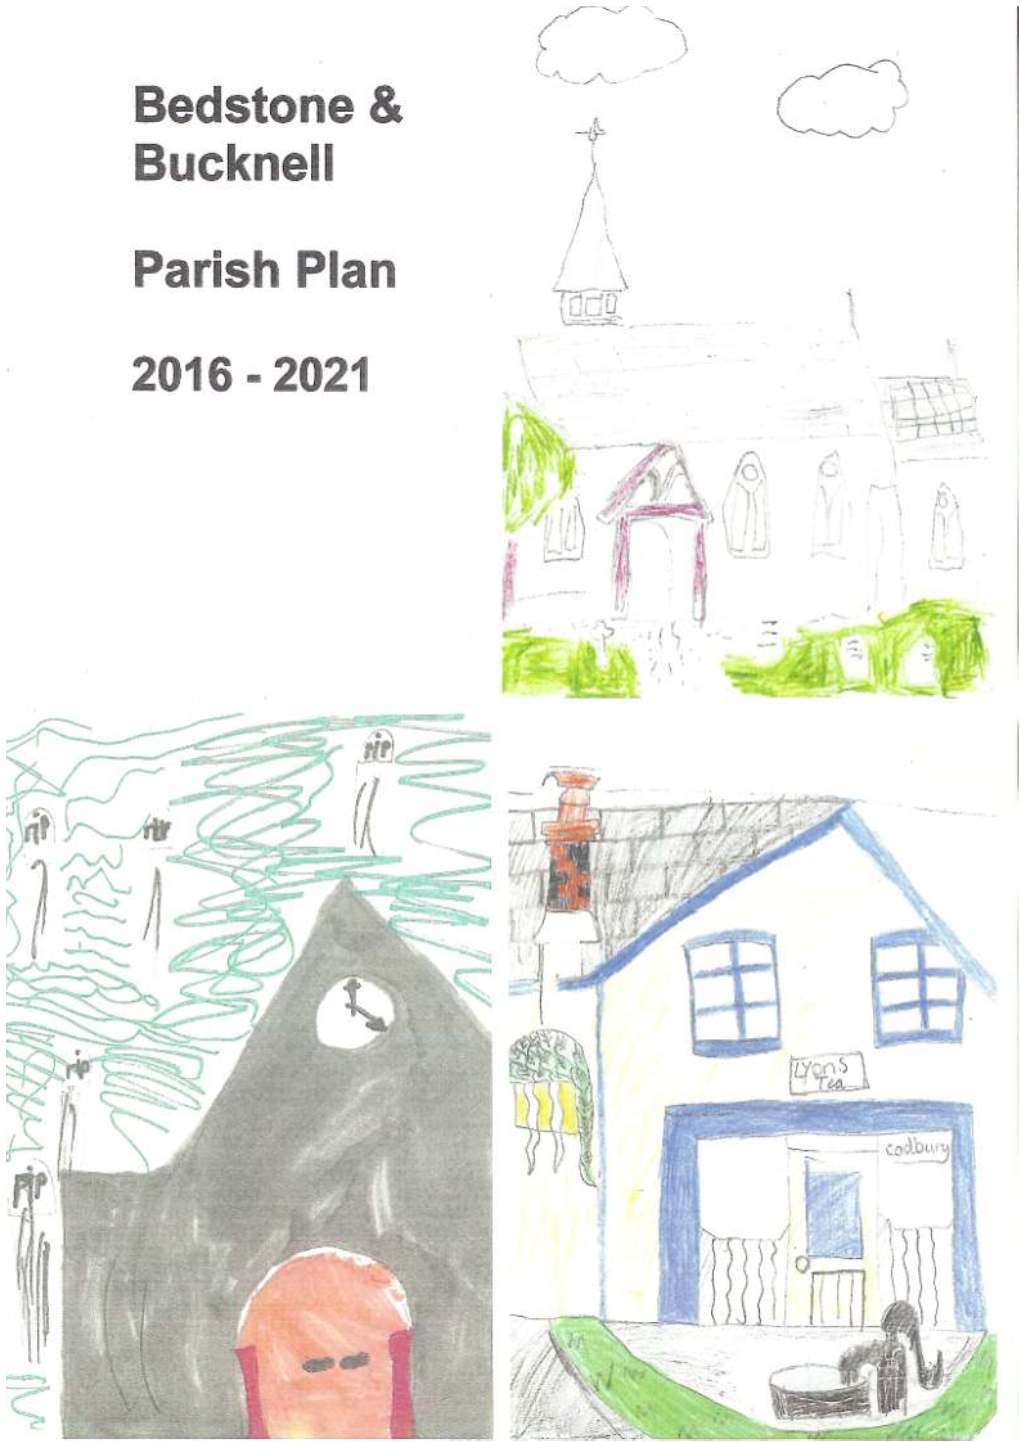 Bedstone & Bucknell Parish Plan 2016